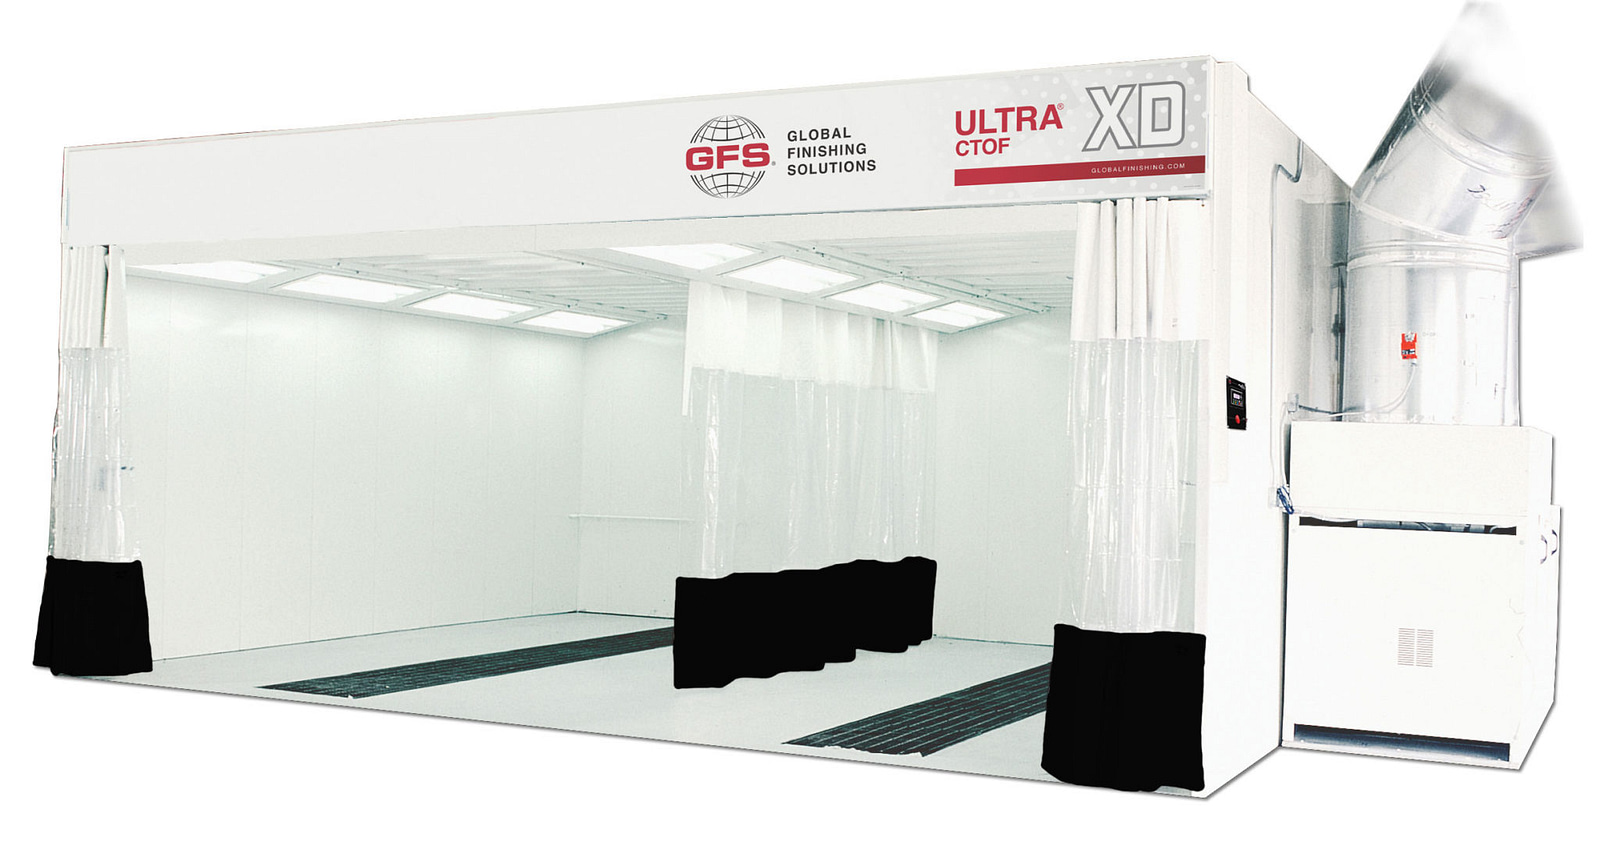 Ultra XD CTOF Booth